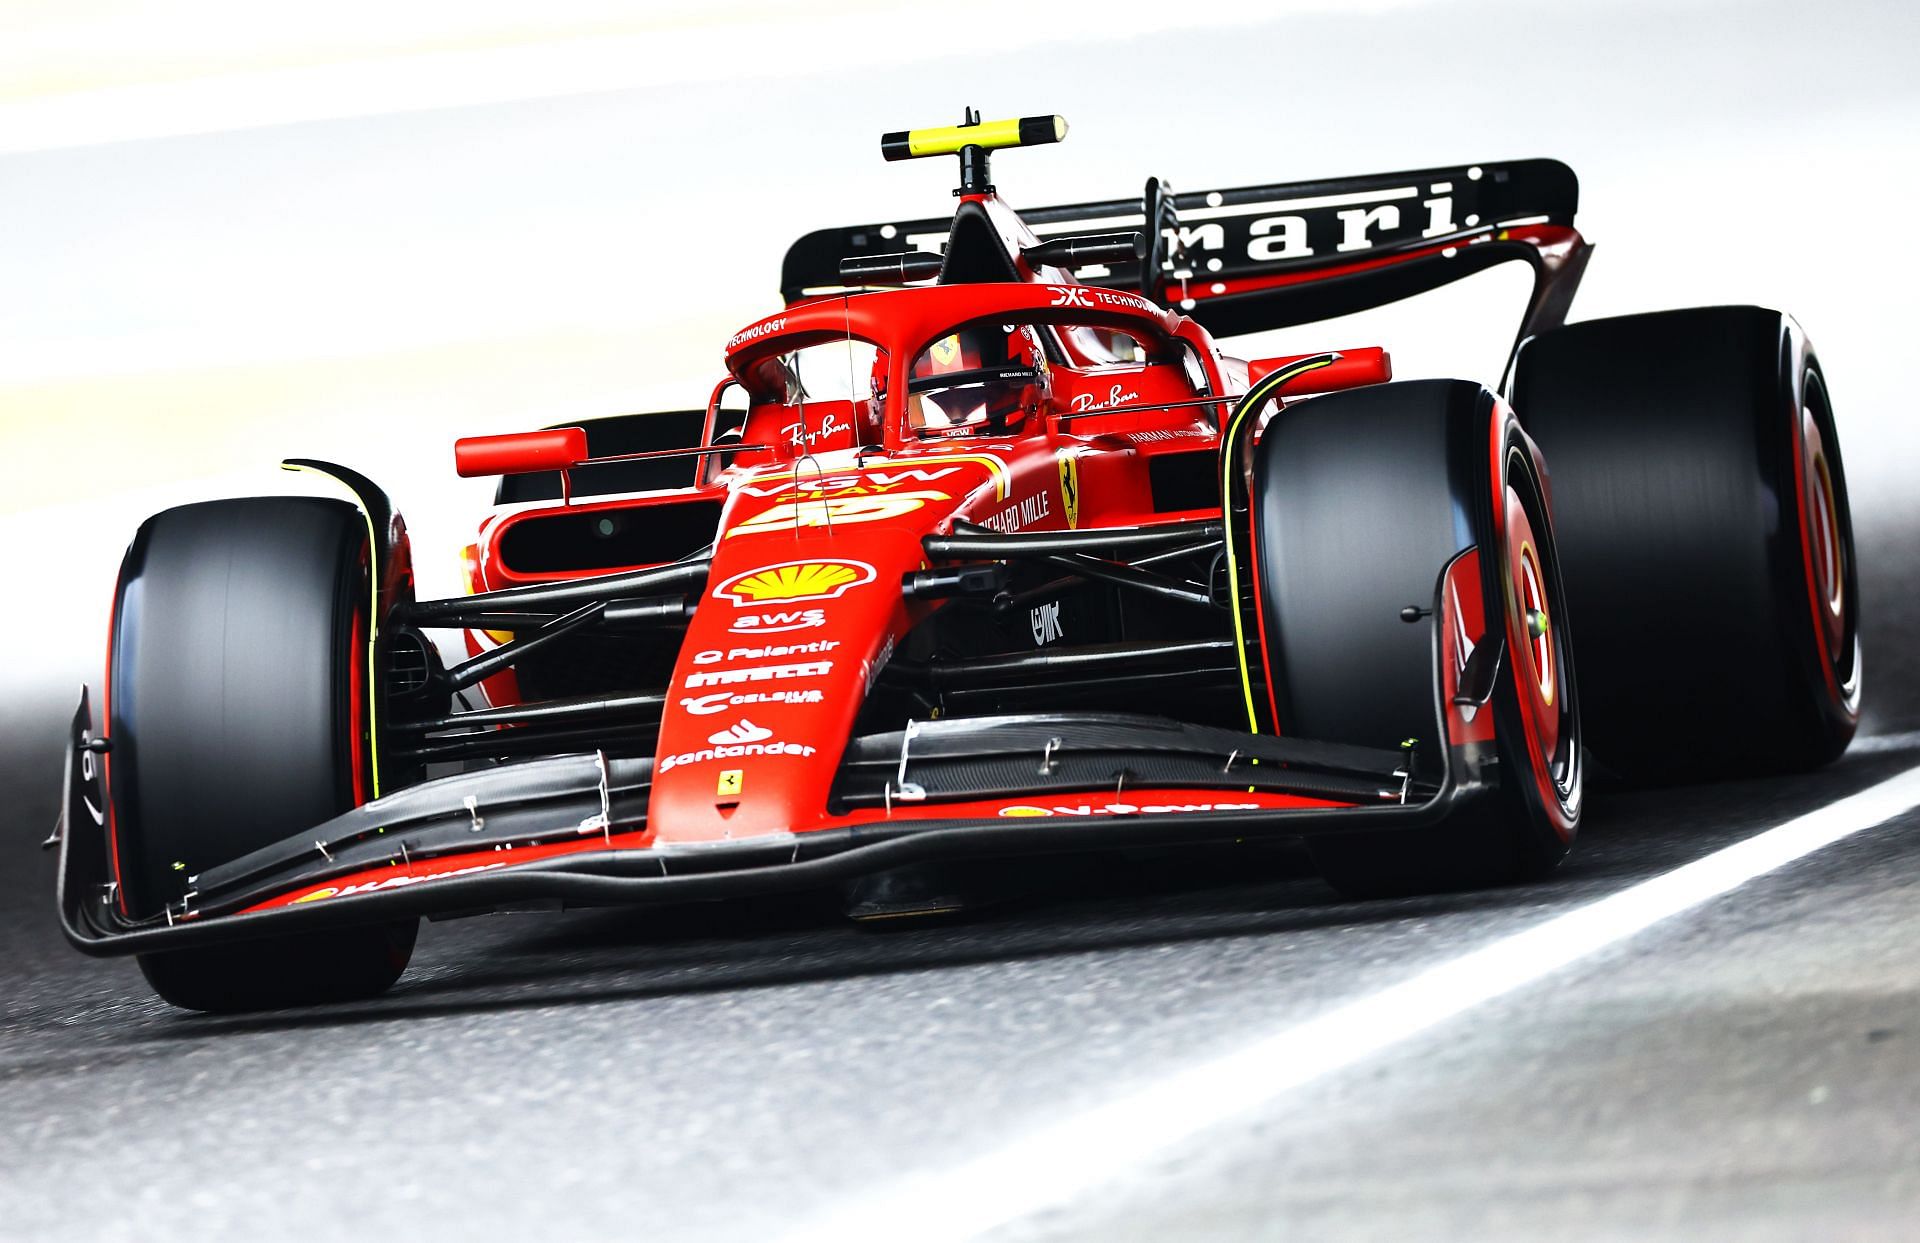 F1 Grand Prix of Japan - Practice